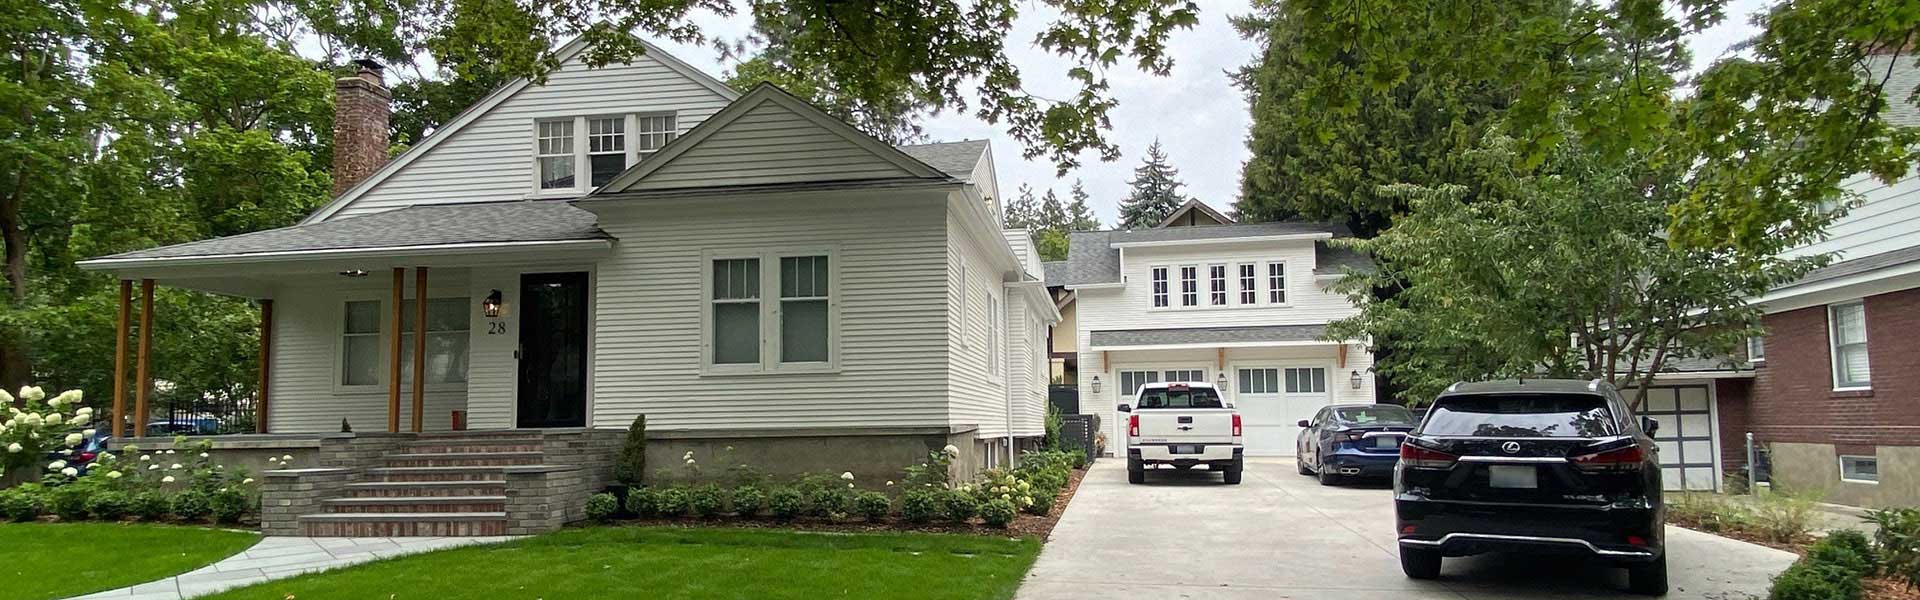 Shaping Spokane Housing - City of Spokane, Washington